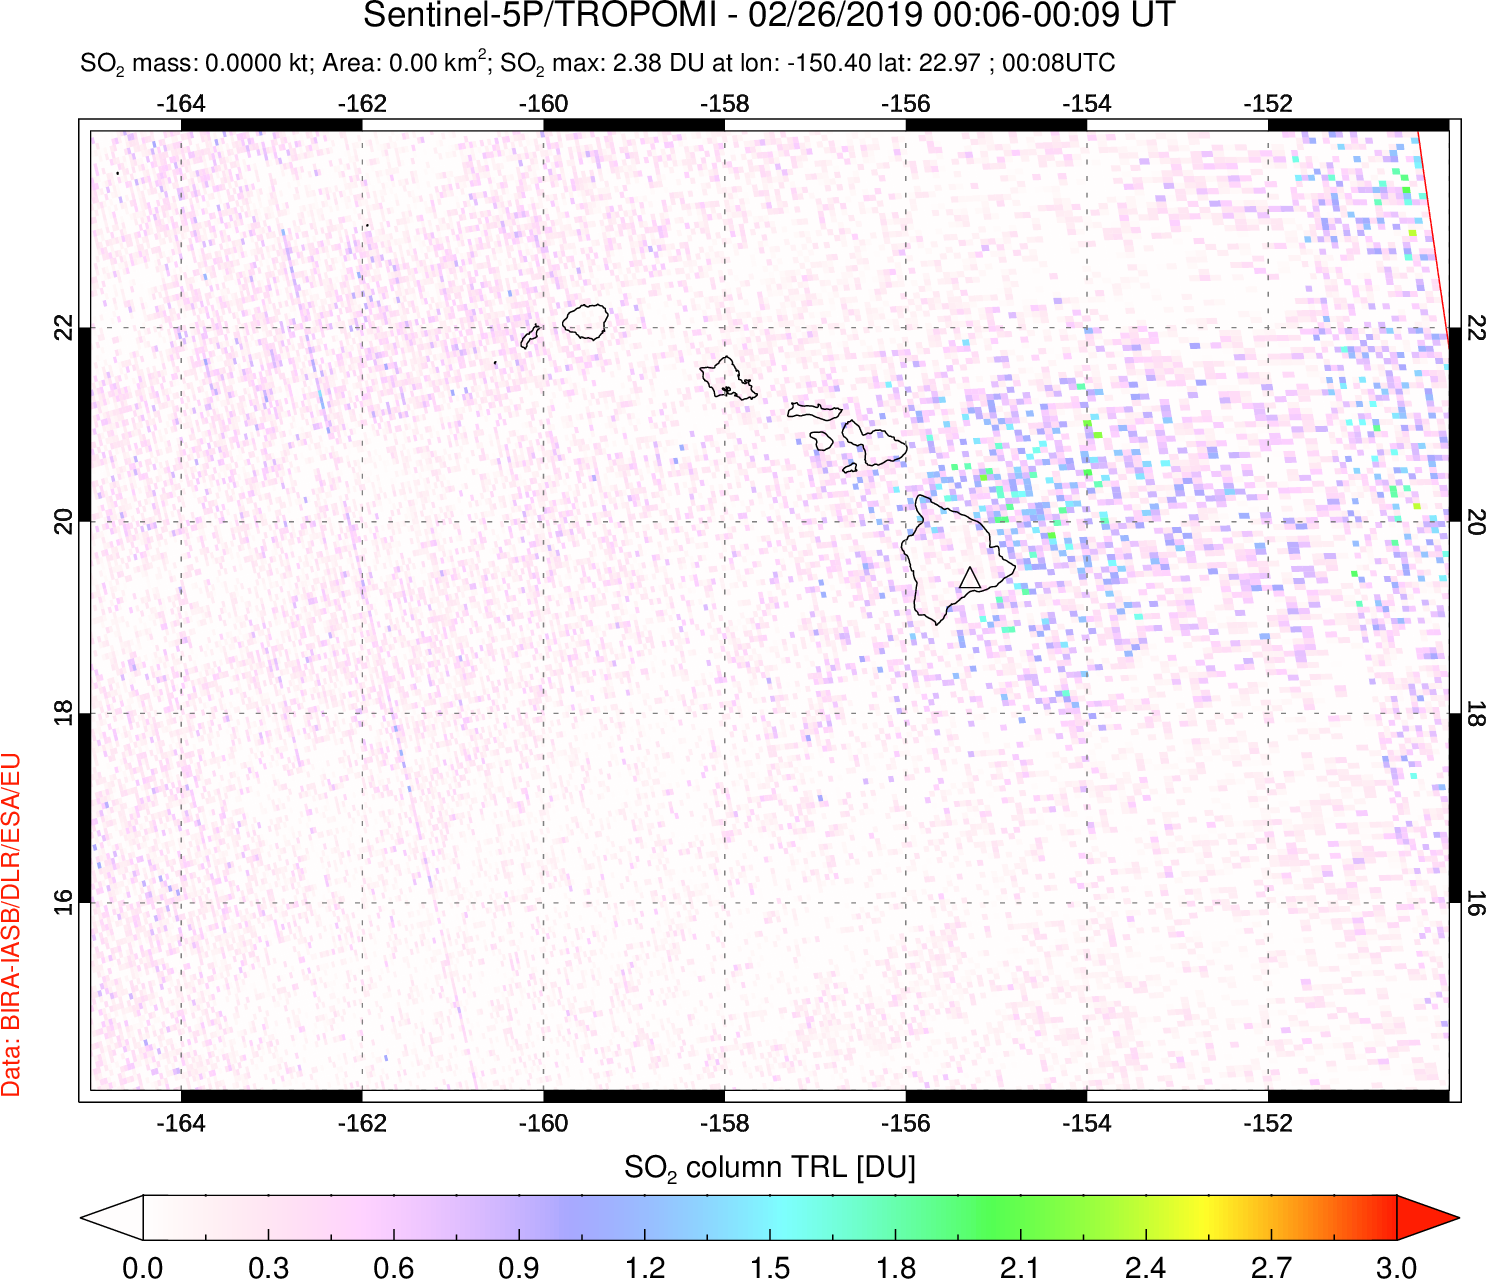 A sulfur dioxide image over Hawaii, USA on Feb 26, 2019.